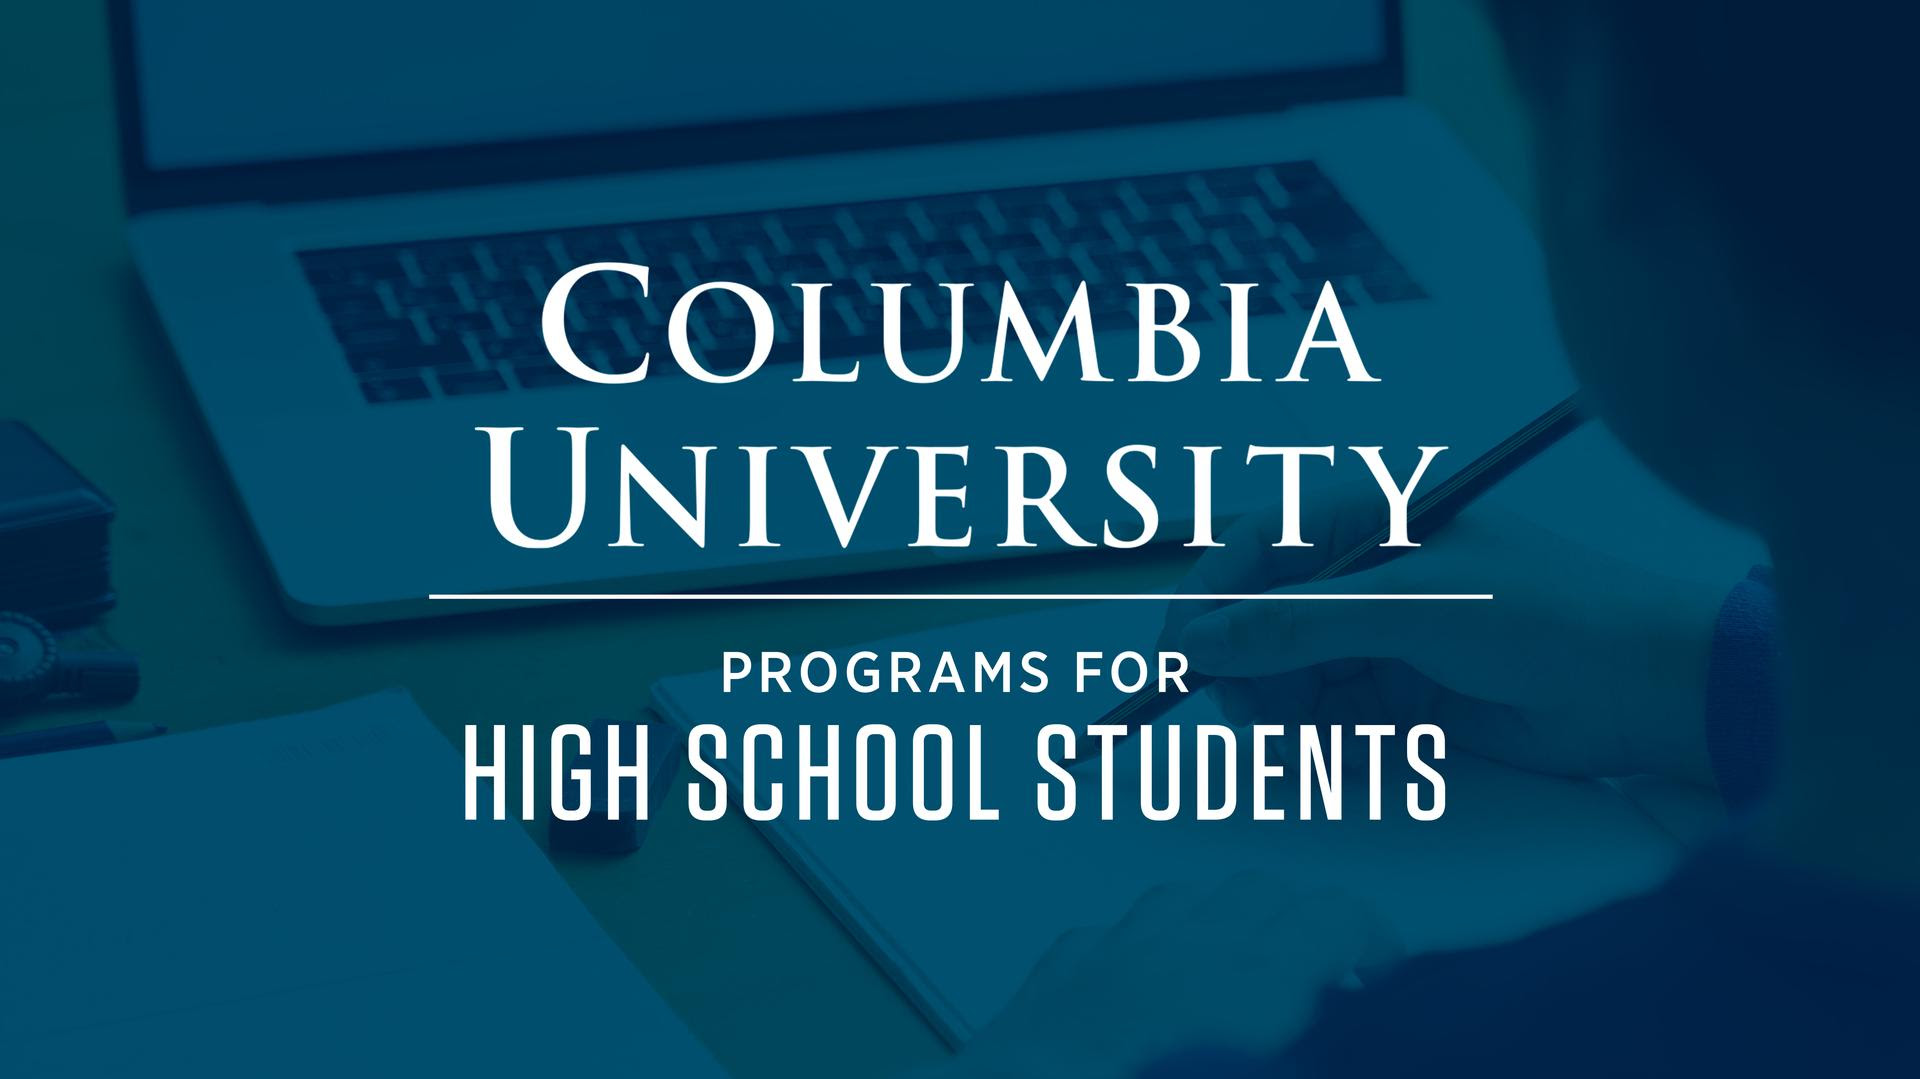 COLUMBIA UNIVERSITY PROGRAMS FOR HIGH SCHOOL STUDENTS